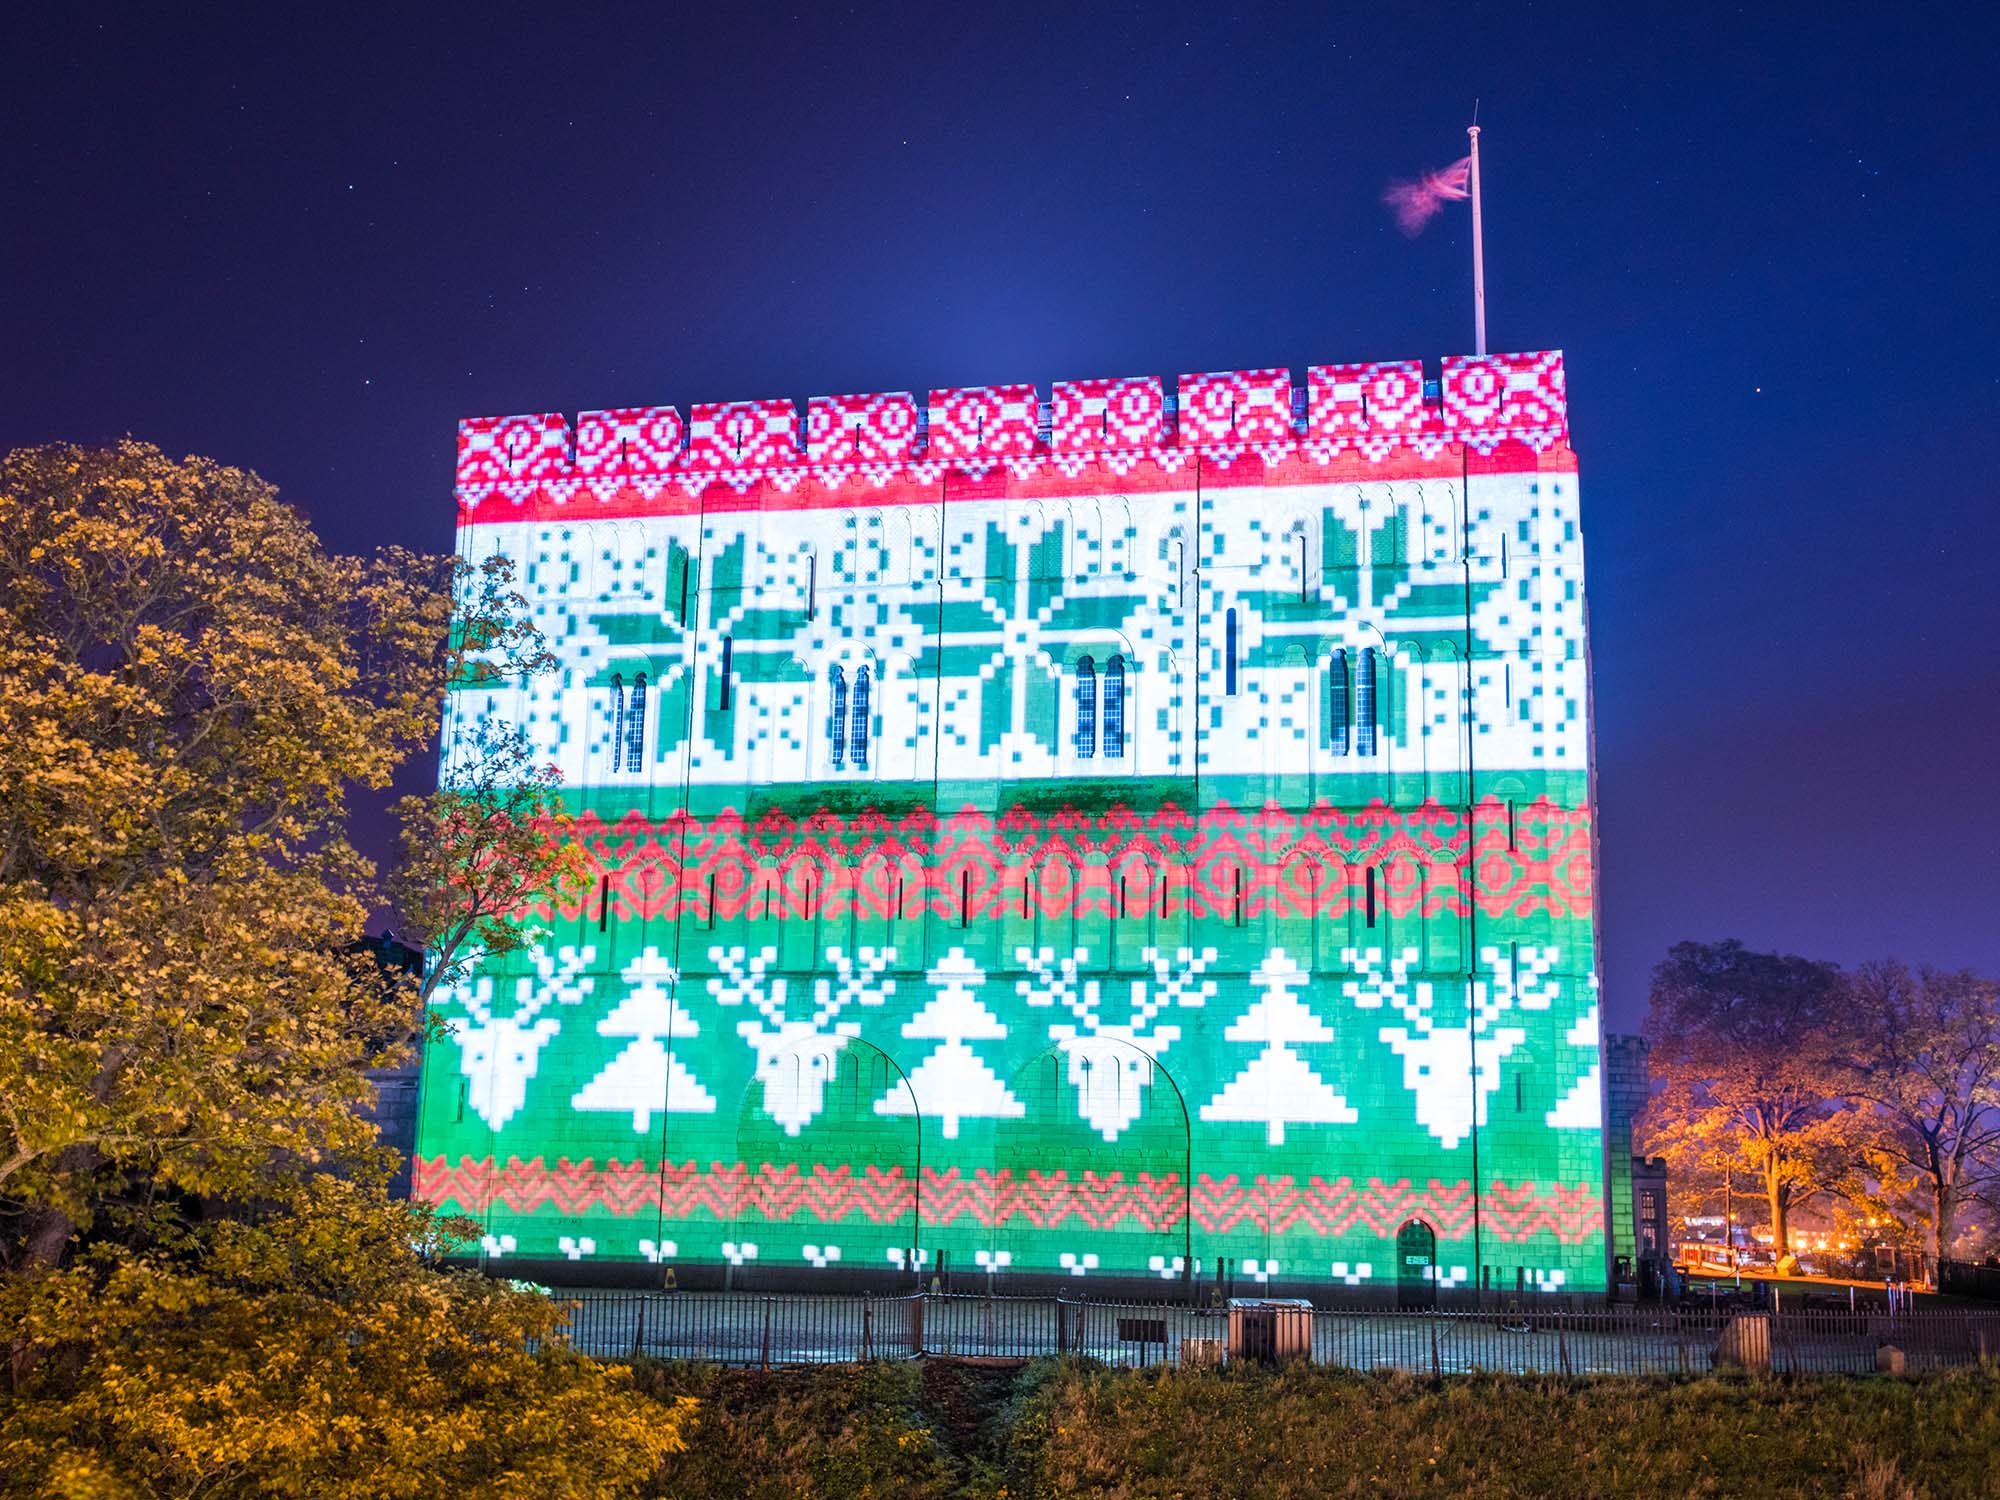 Norwich Castle Christmas projections show live